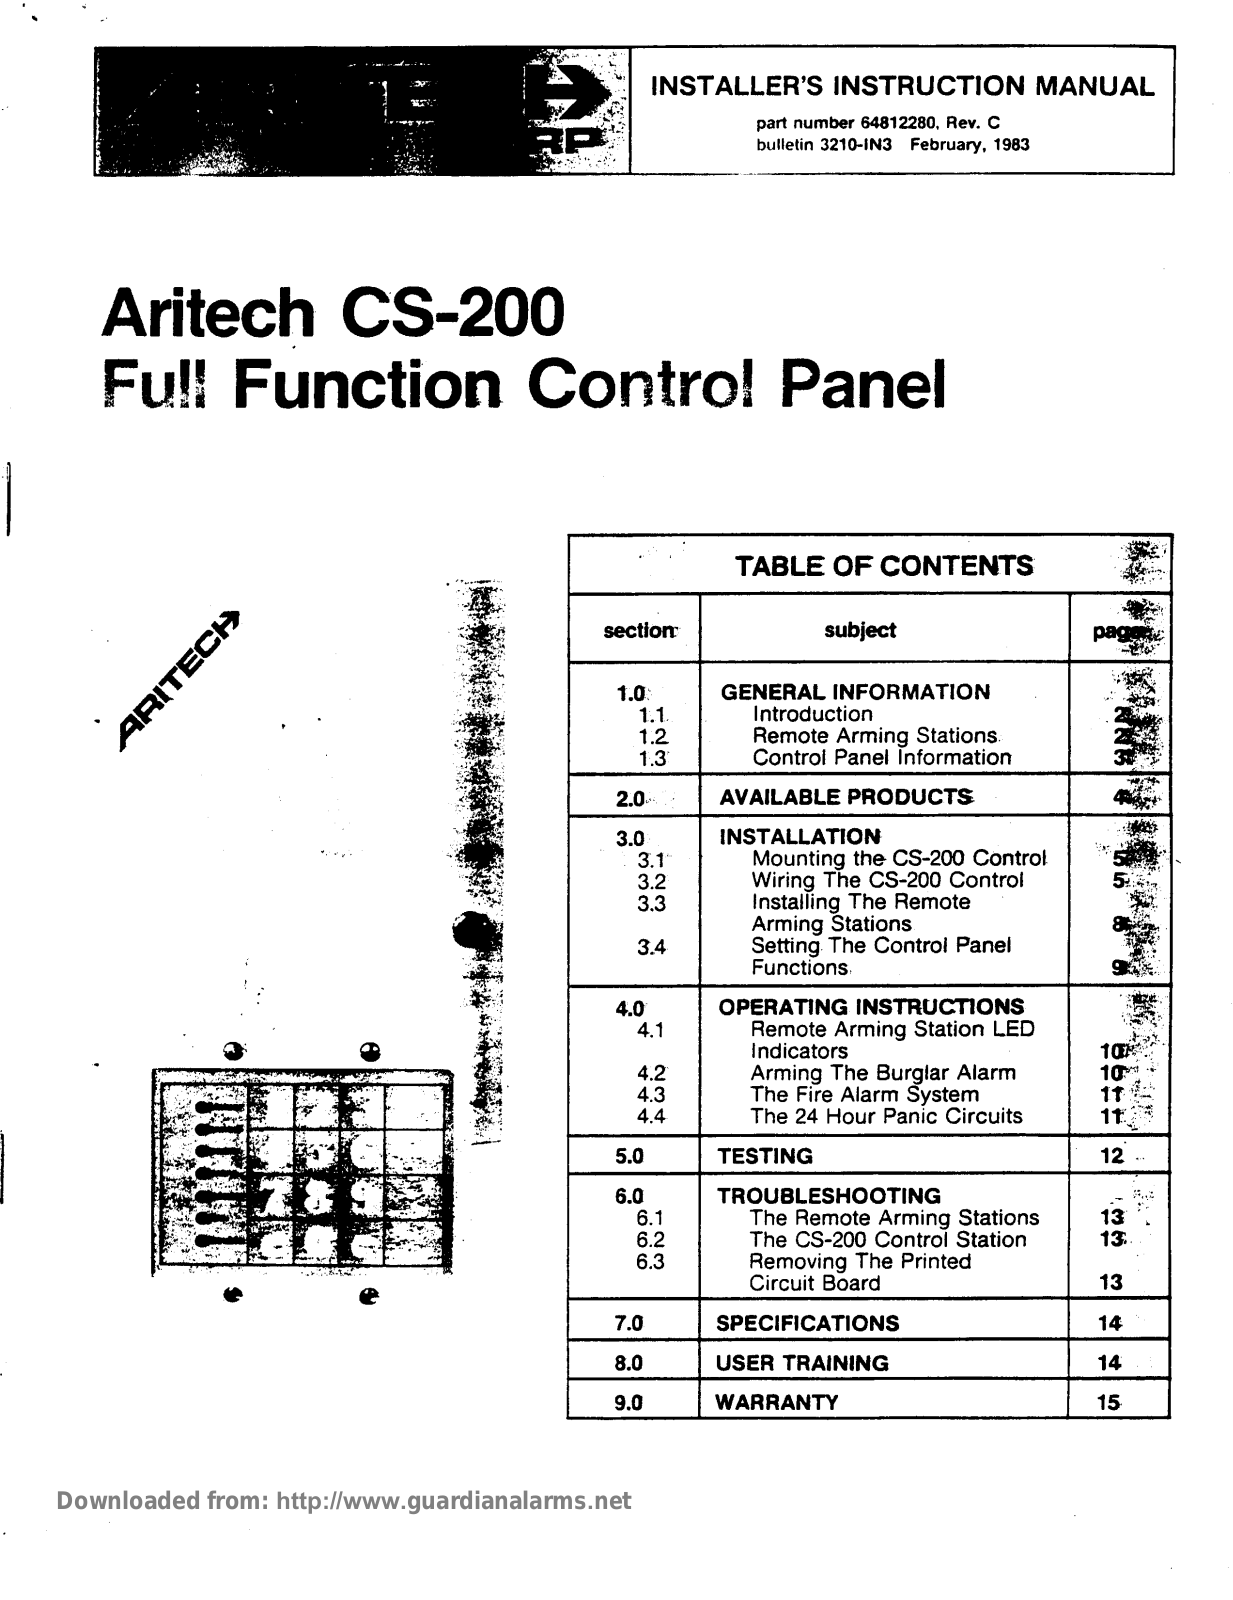 Aritech CS-200 Installation Manual